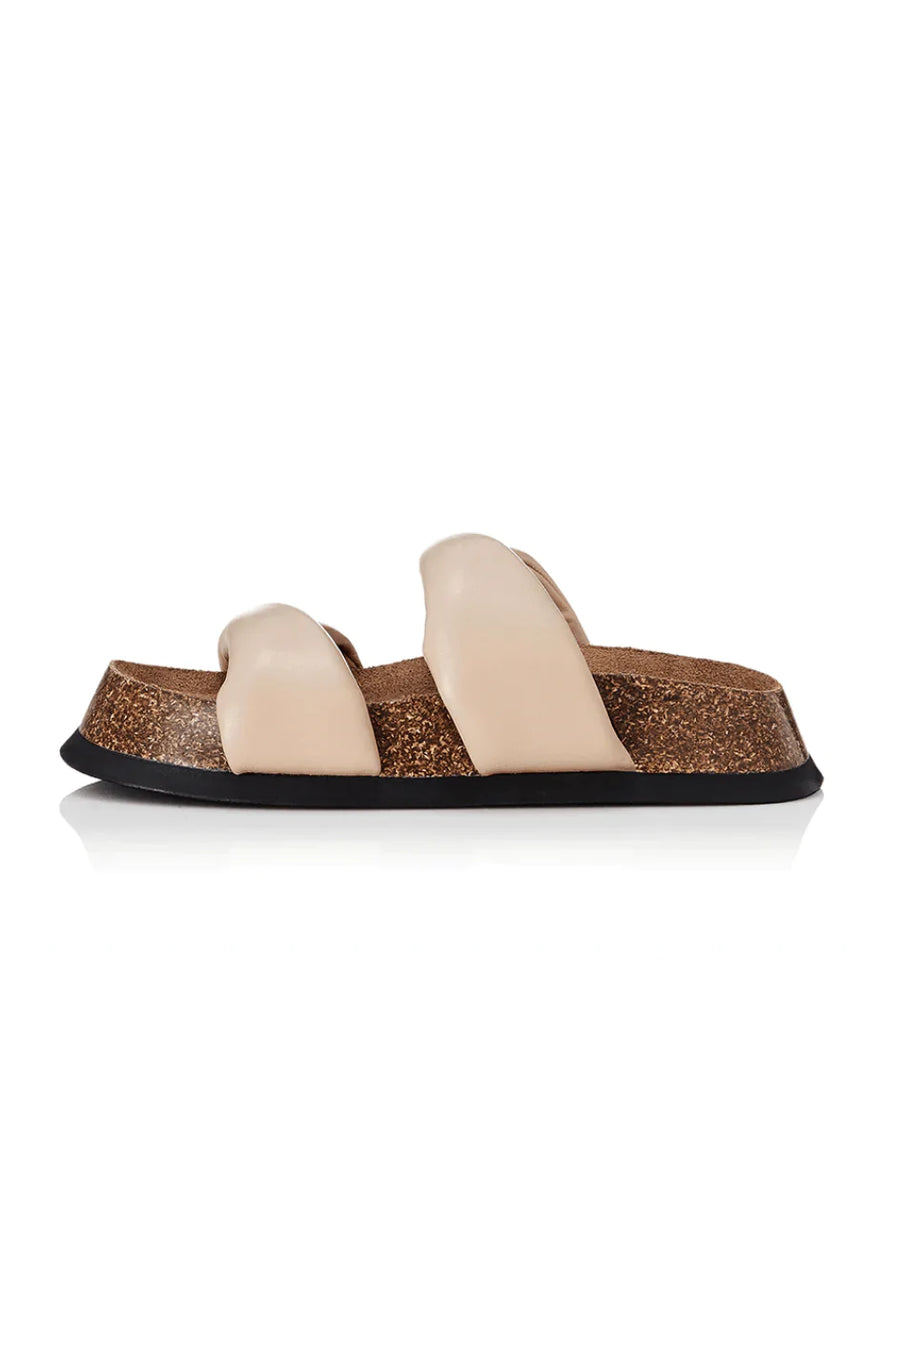 Alias Mae Dani Leather Sandal SALE